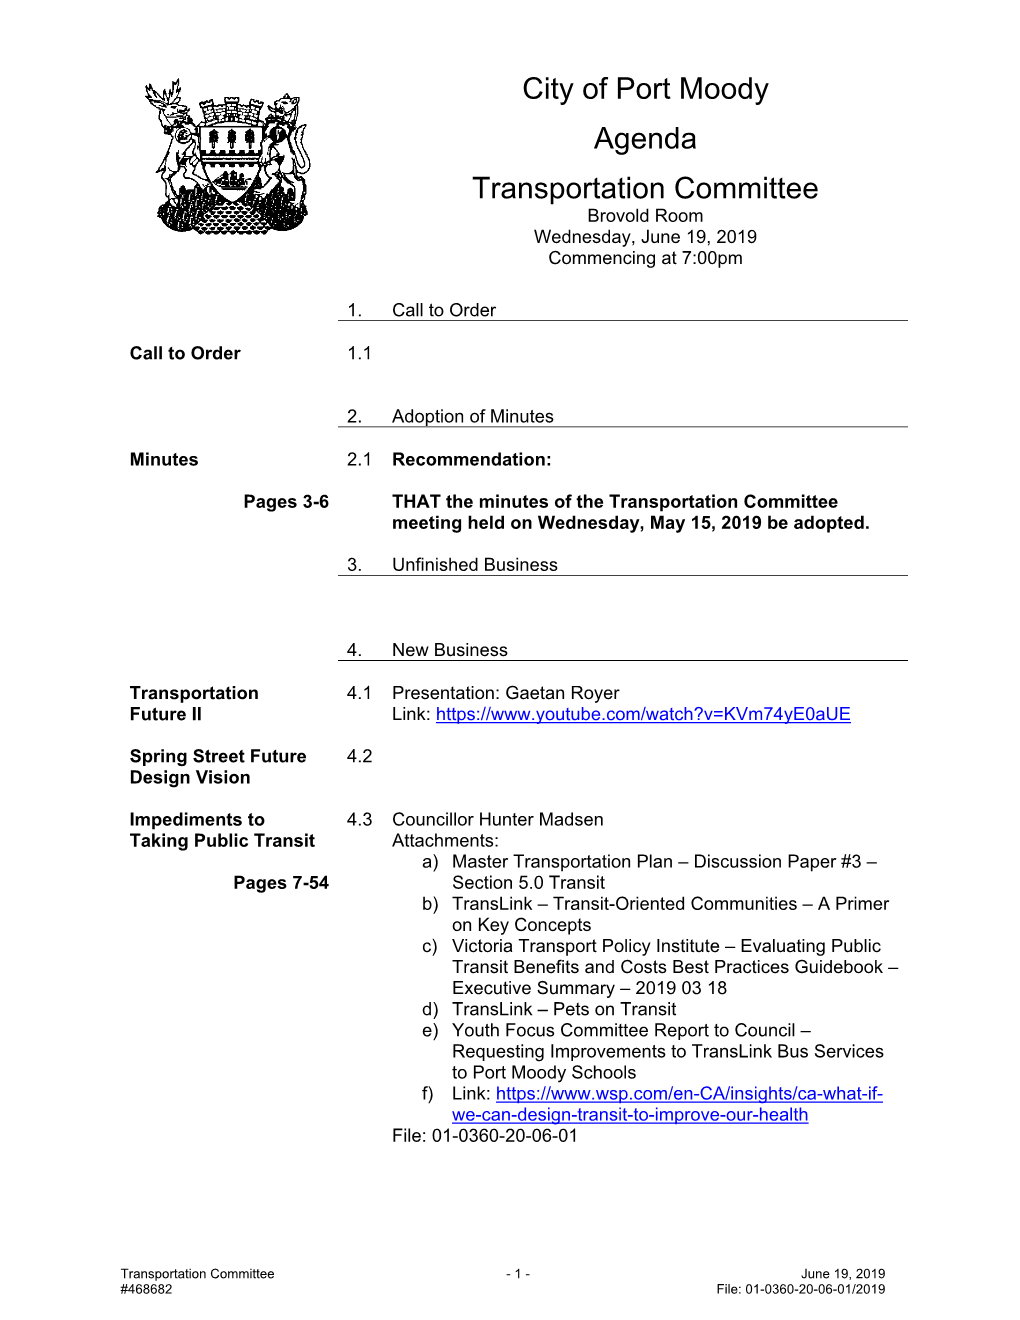 City of Port Moody Agenda Transportation Committee